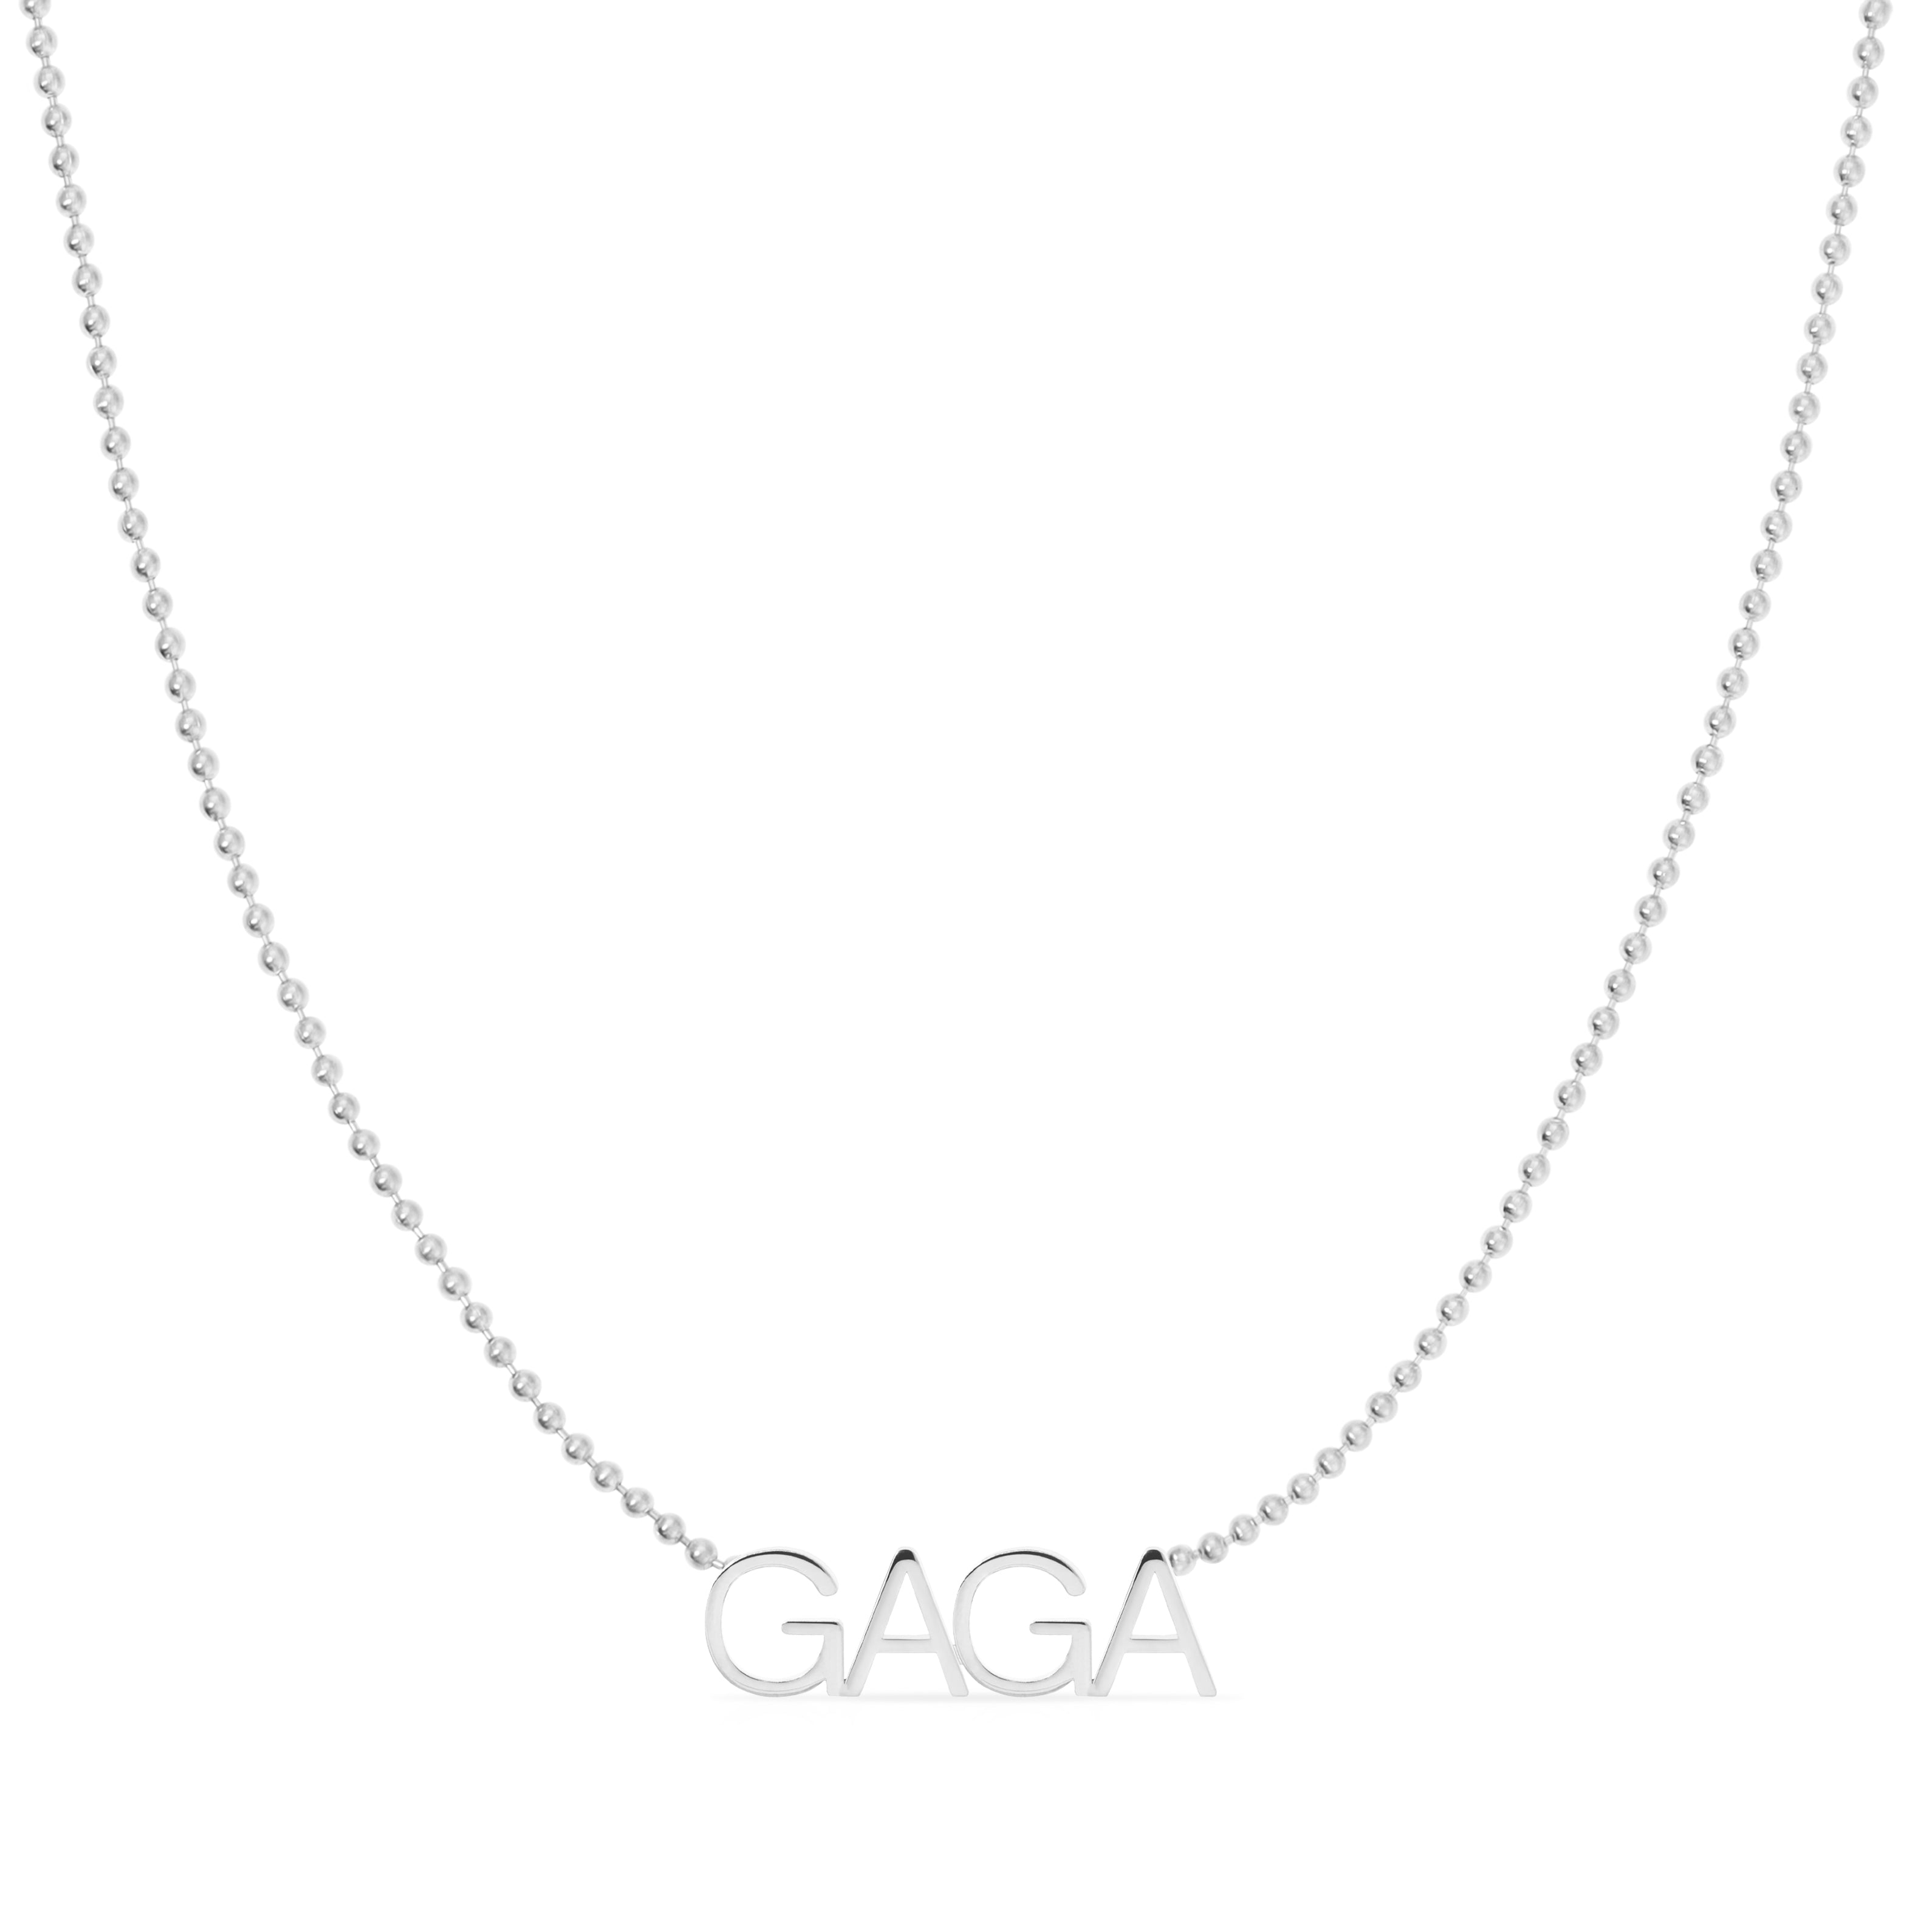 GAGA Necklace